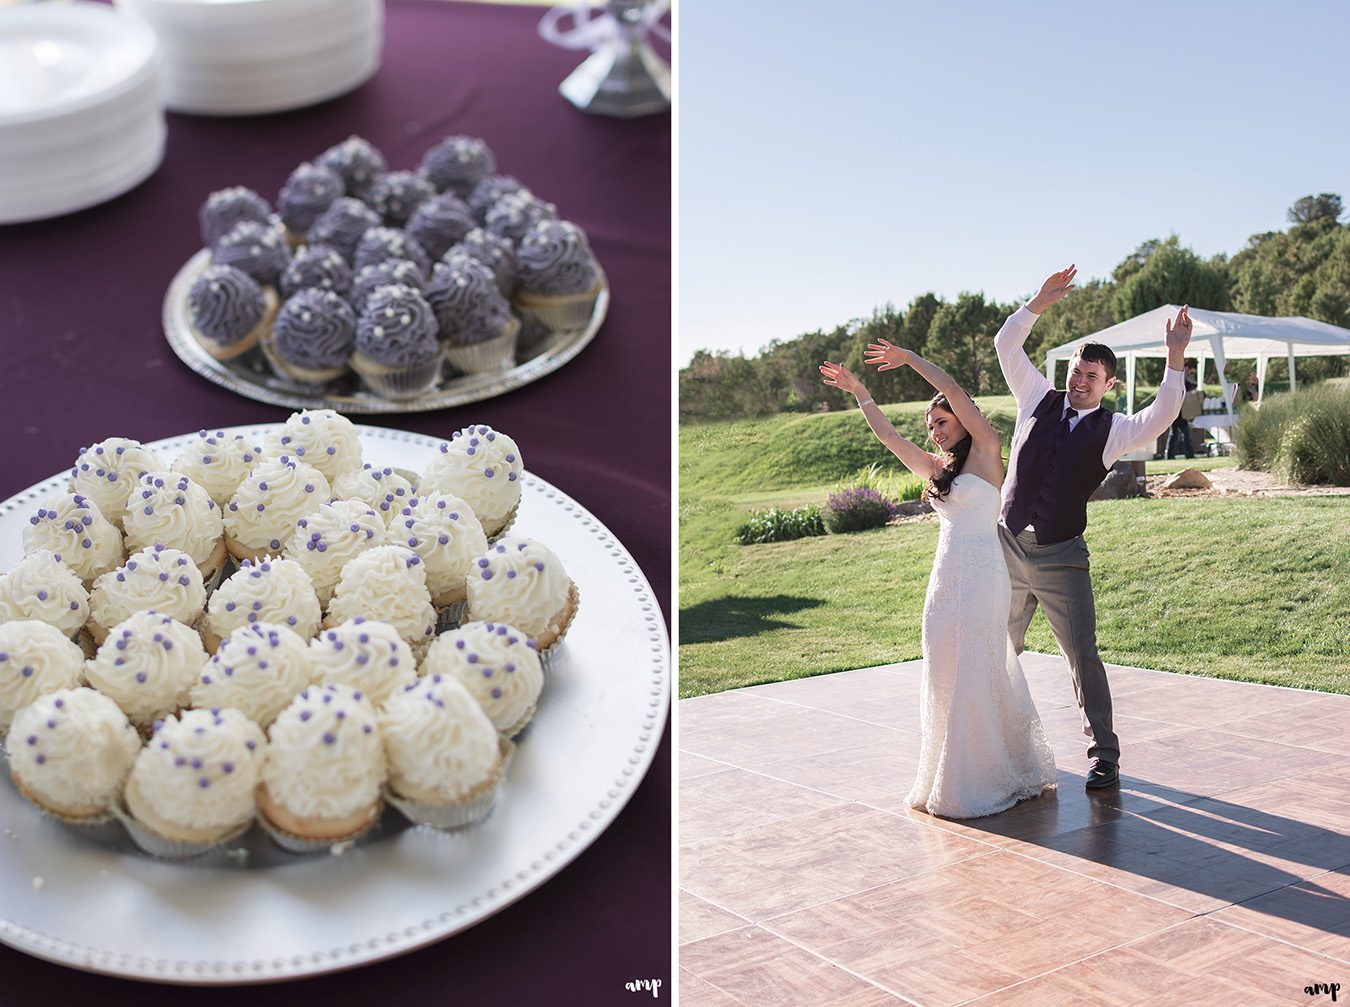 Wedding details for an eggplant purple wedding